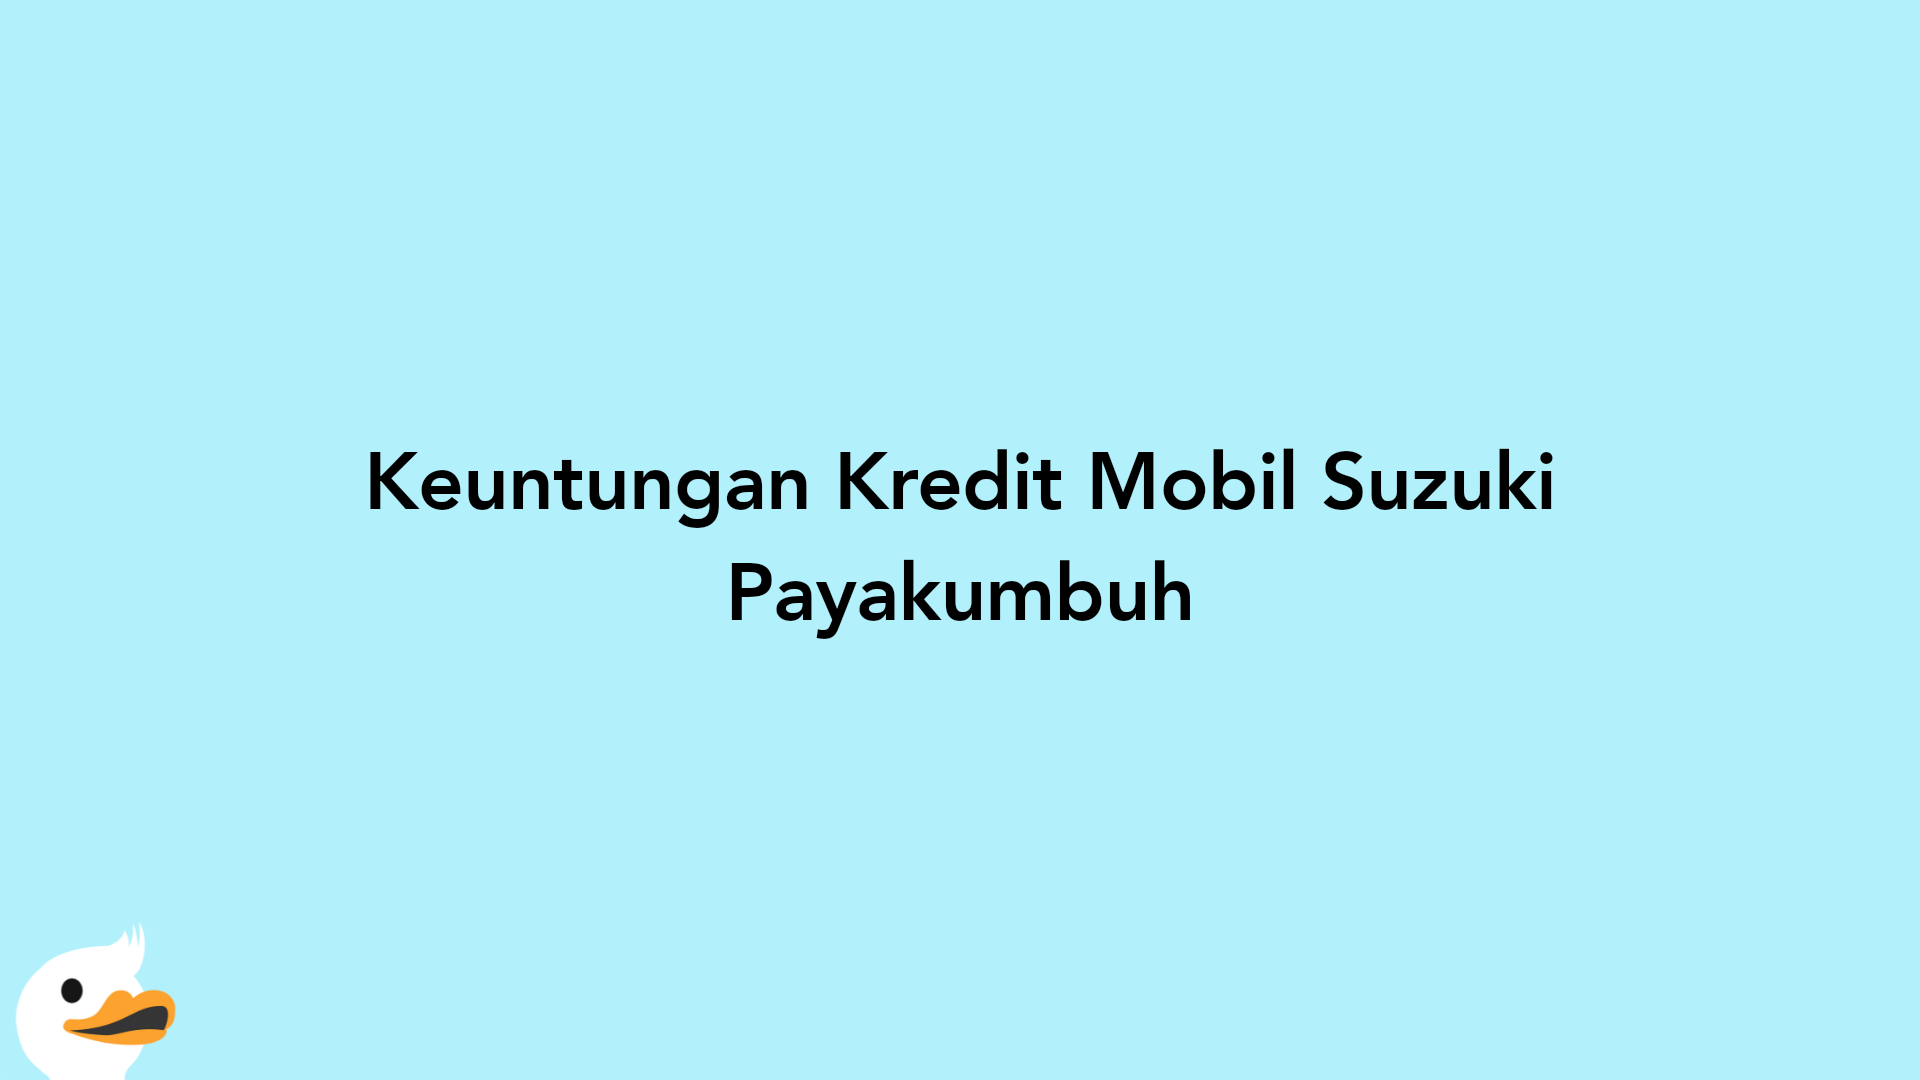 Keuntungan Kredit Mobil Suzuki Payakumbuh